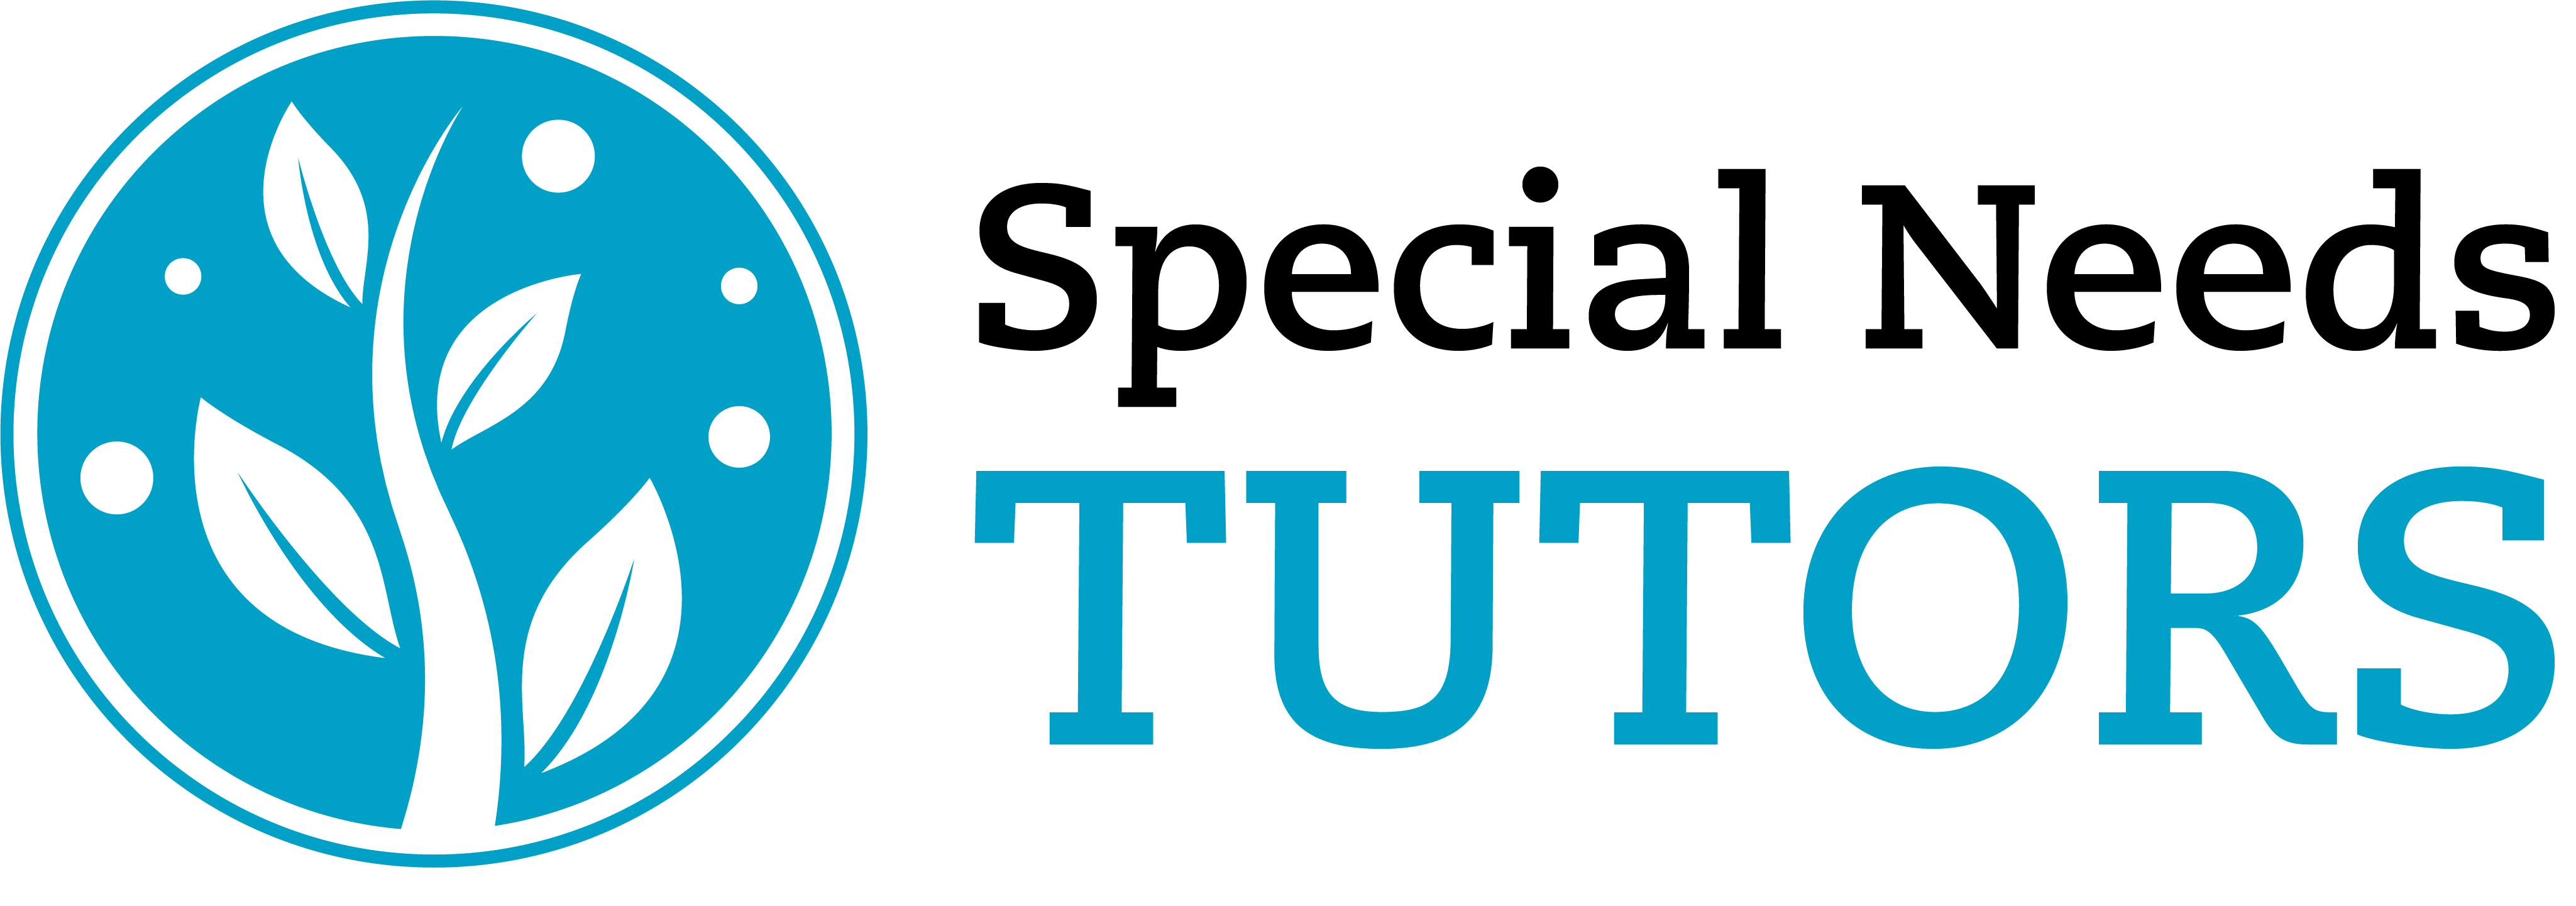 sped-tutors-logo